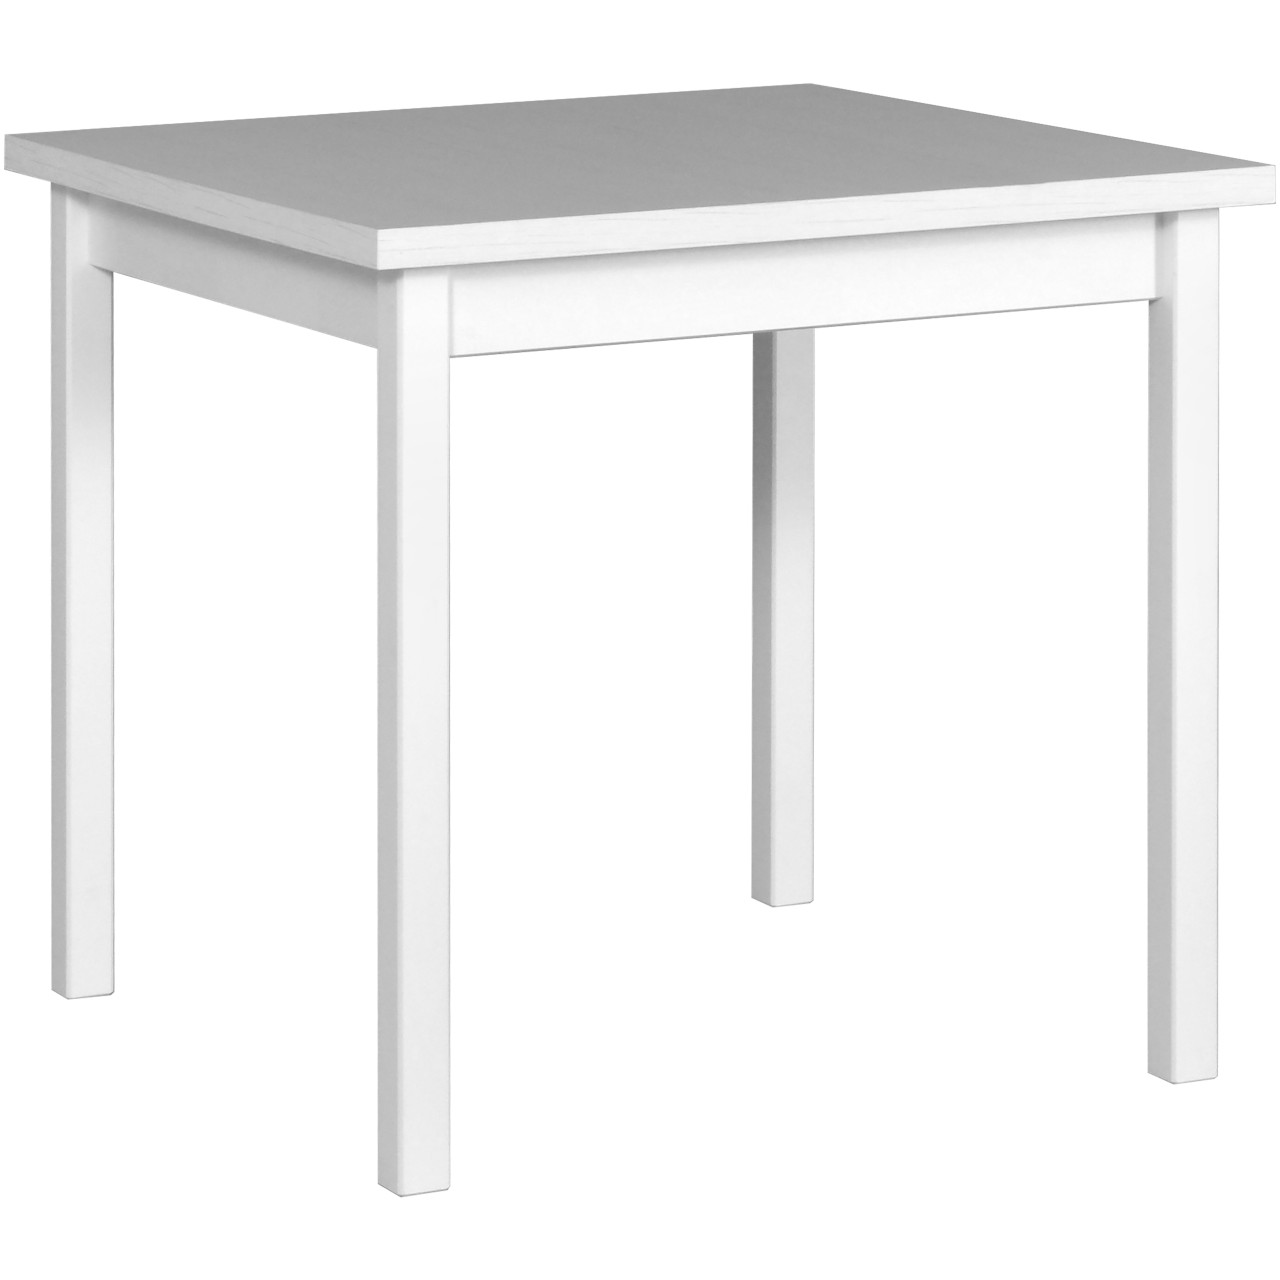 Table MAX 9 80x80 white laminate